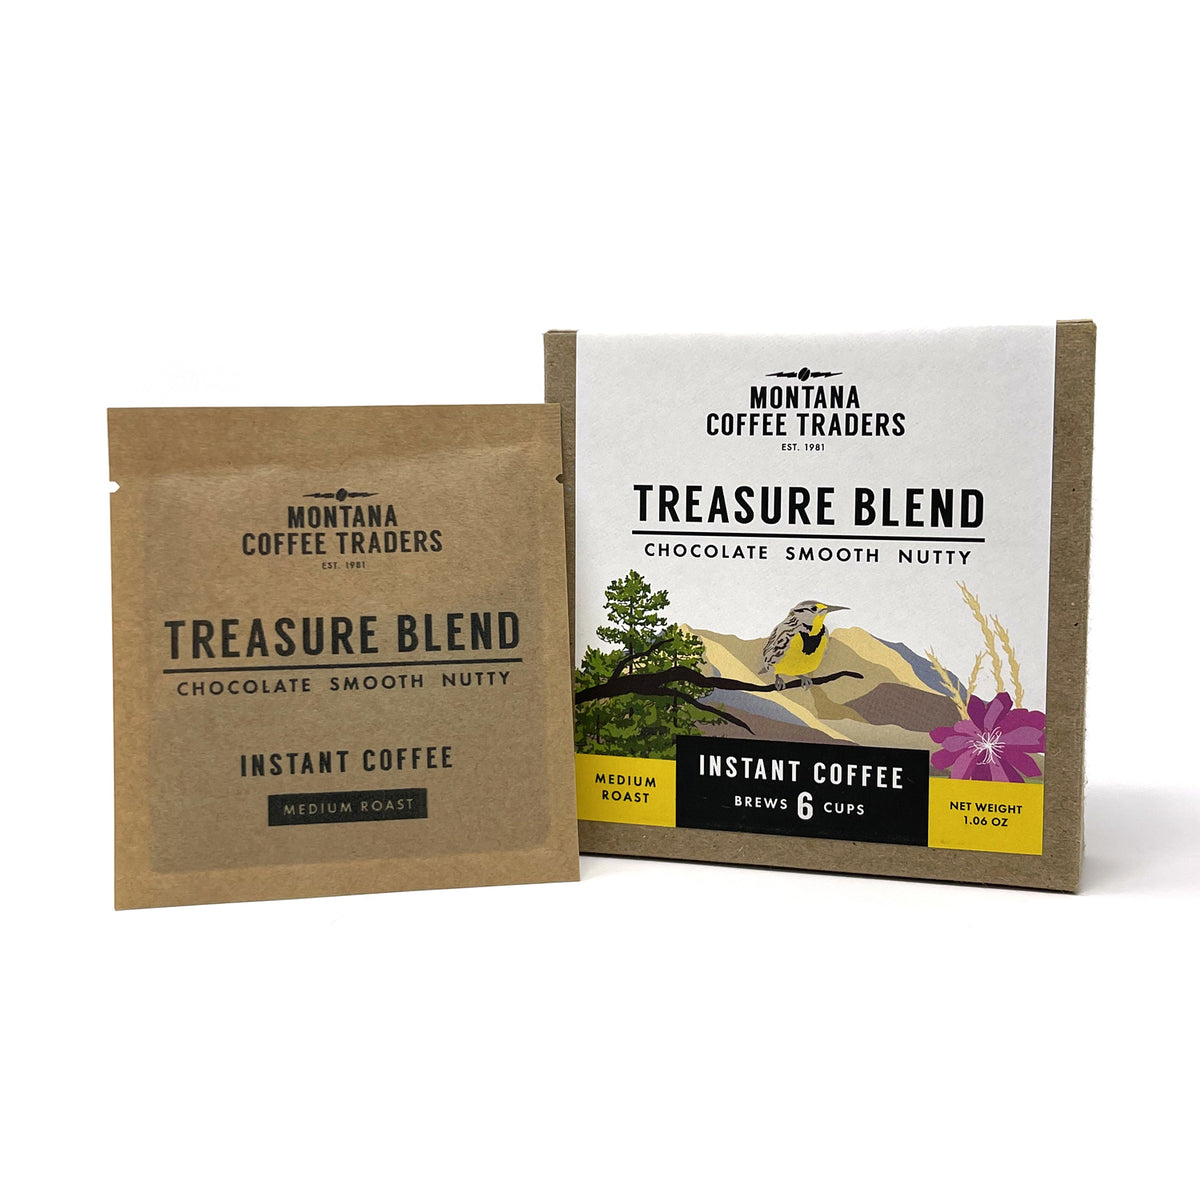 Treasure Blend Instant Coffee, Montana Coffee Traders Kalispell